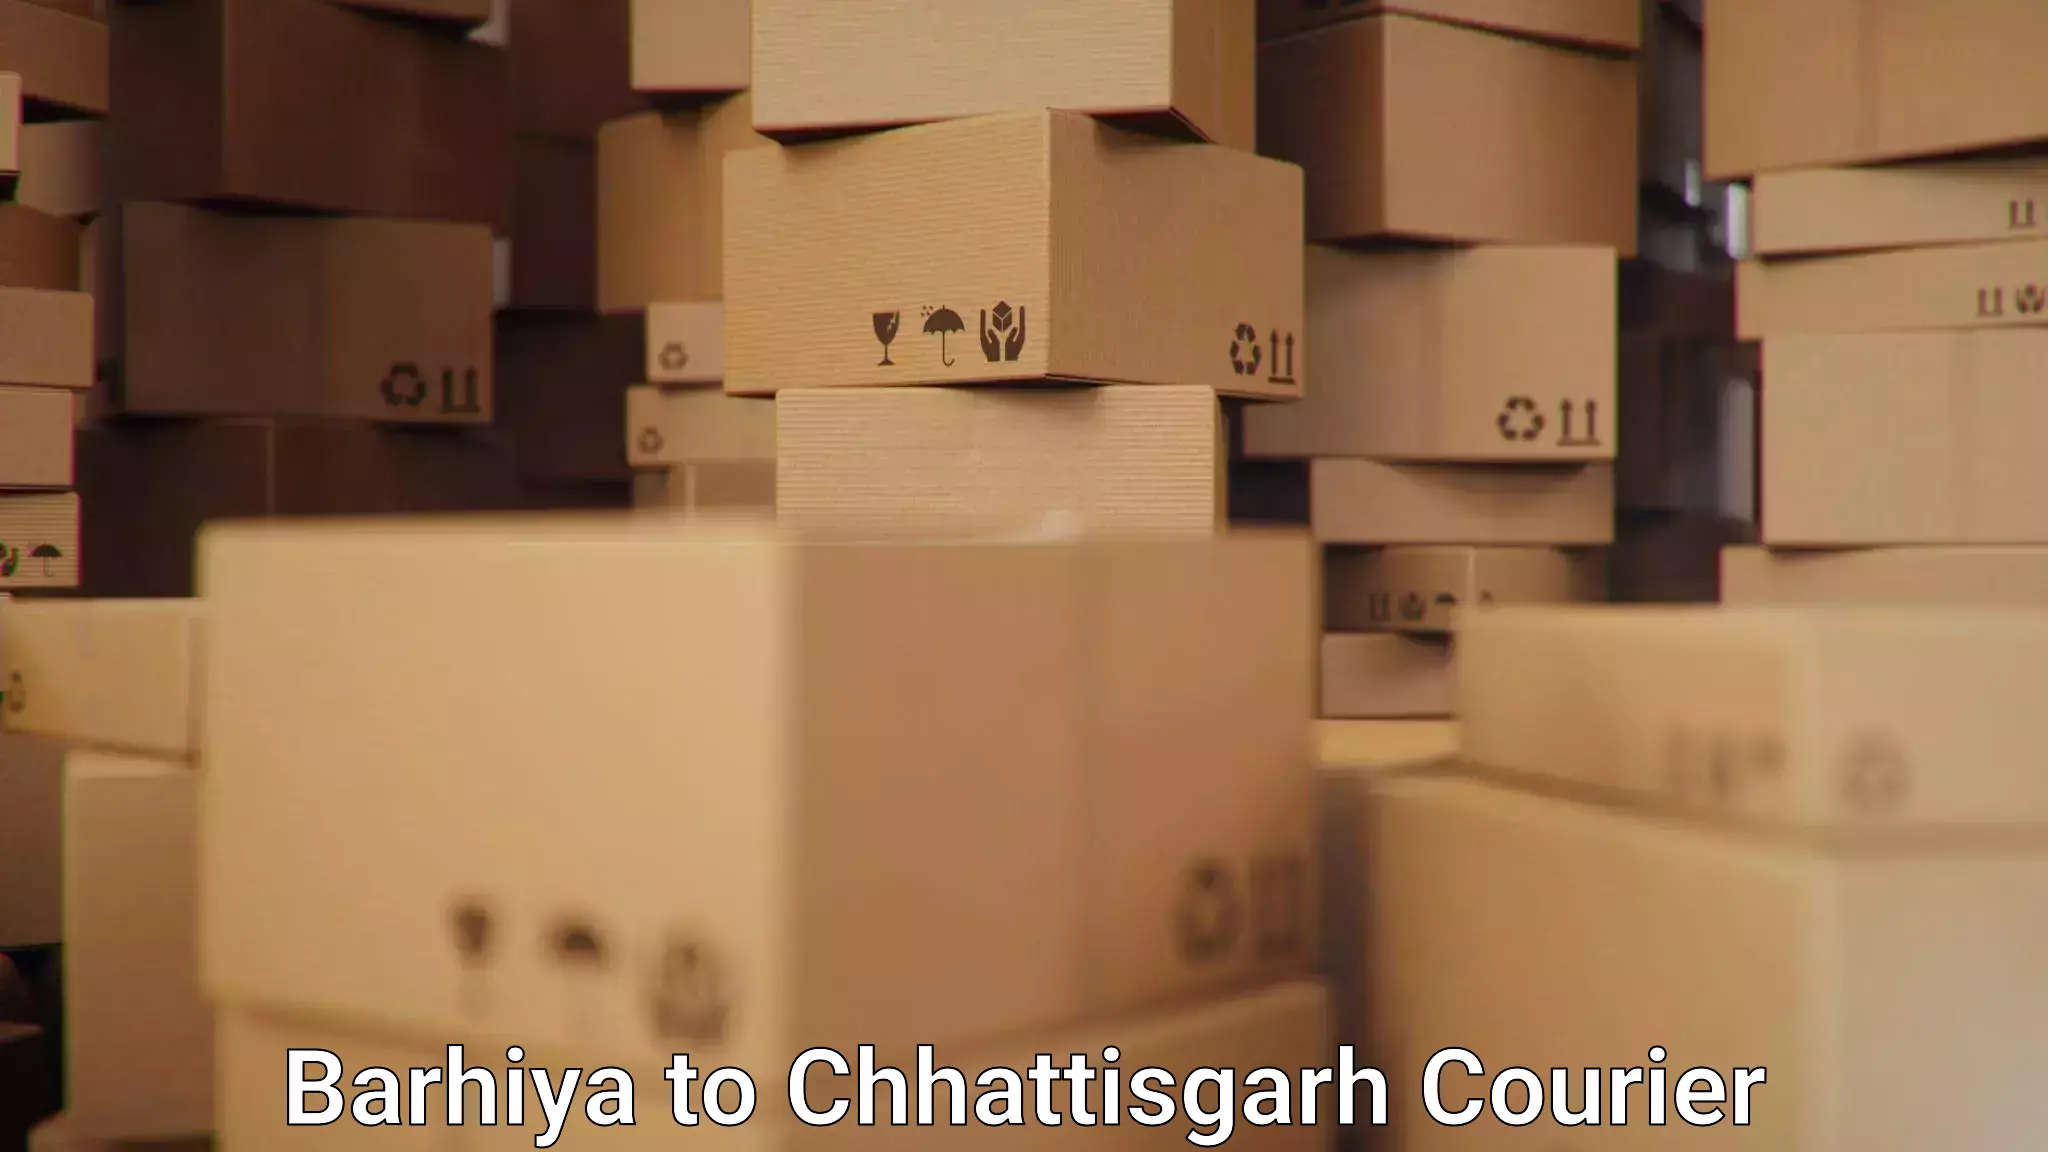 Courier service innovation Barhiya to Raigarh Chhattisgarh